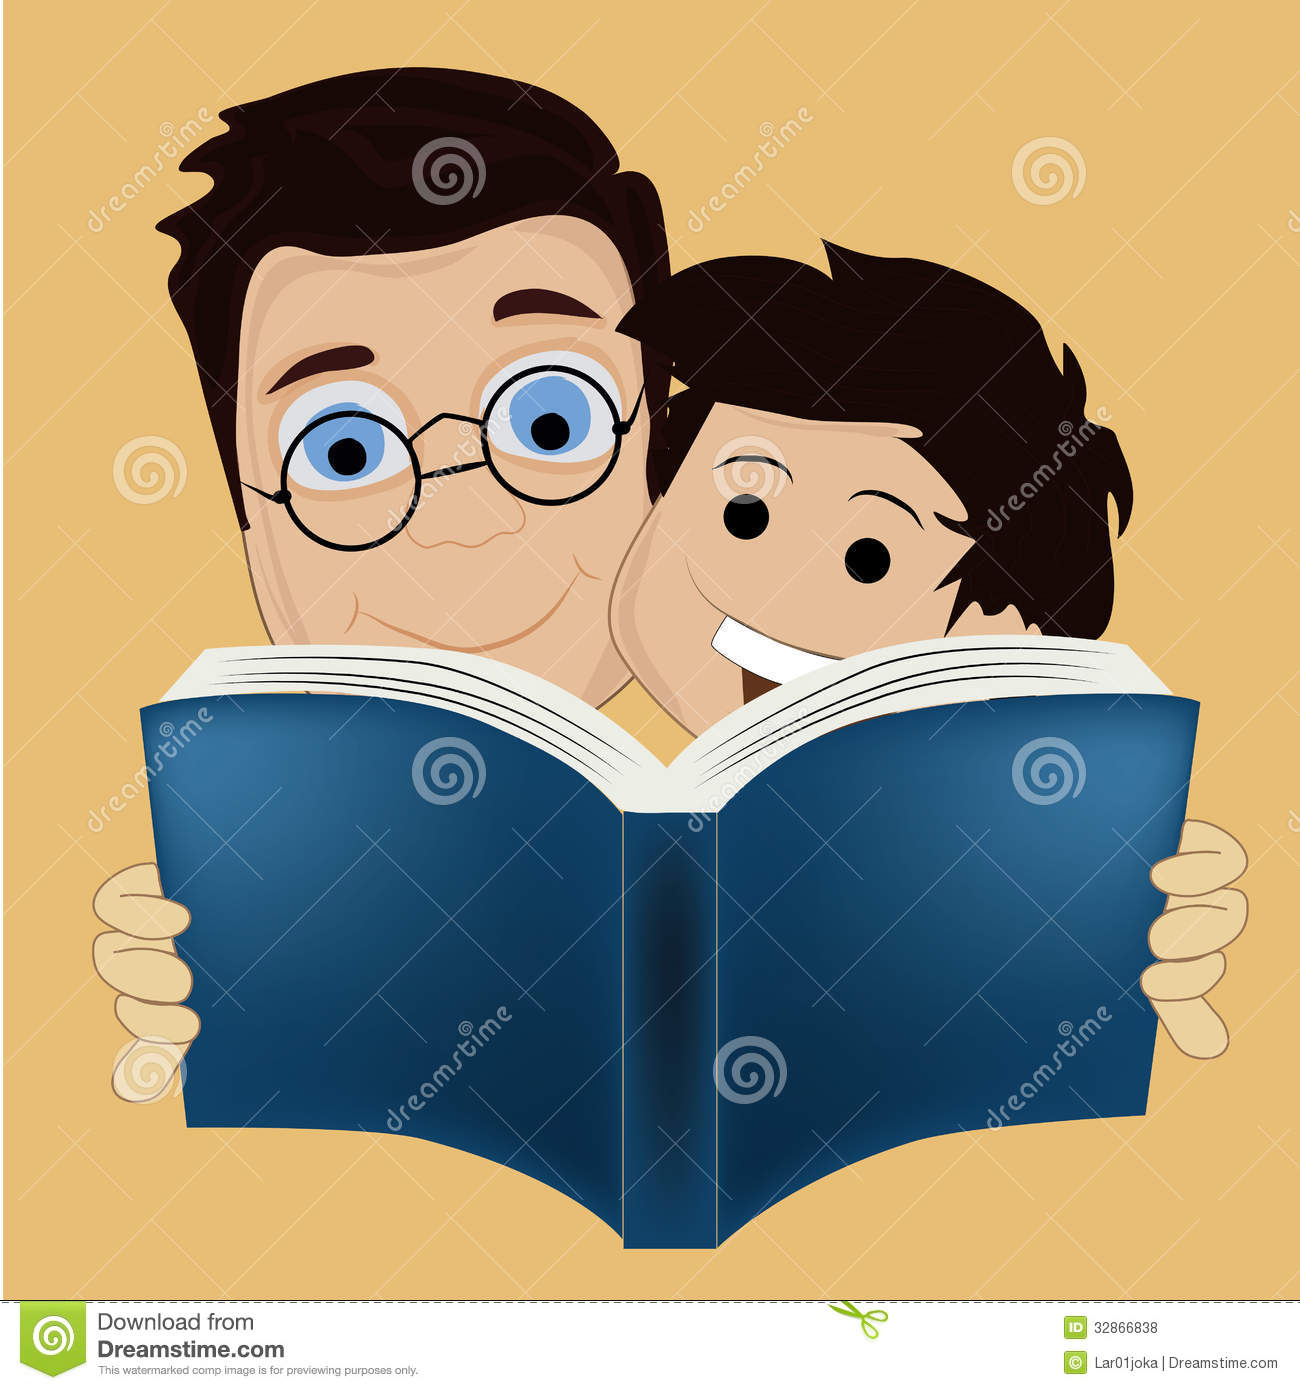 Royalty Free Stock Photos  Two Boys Reading A Book